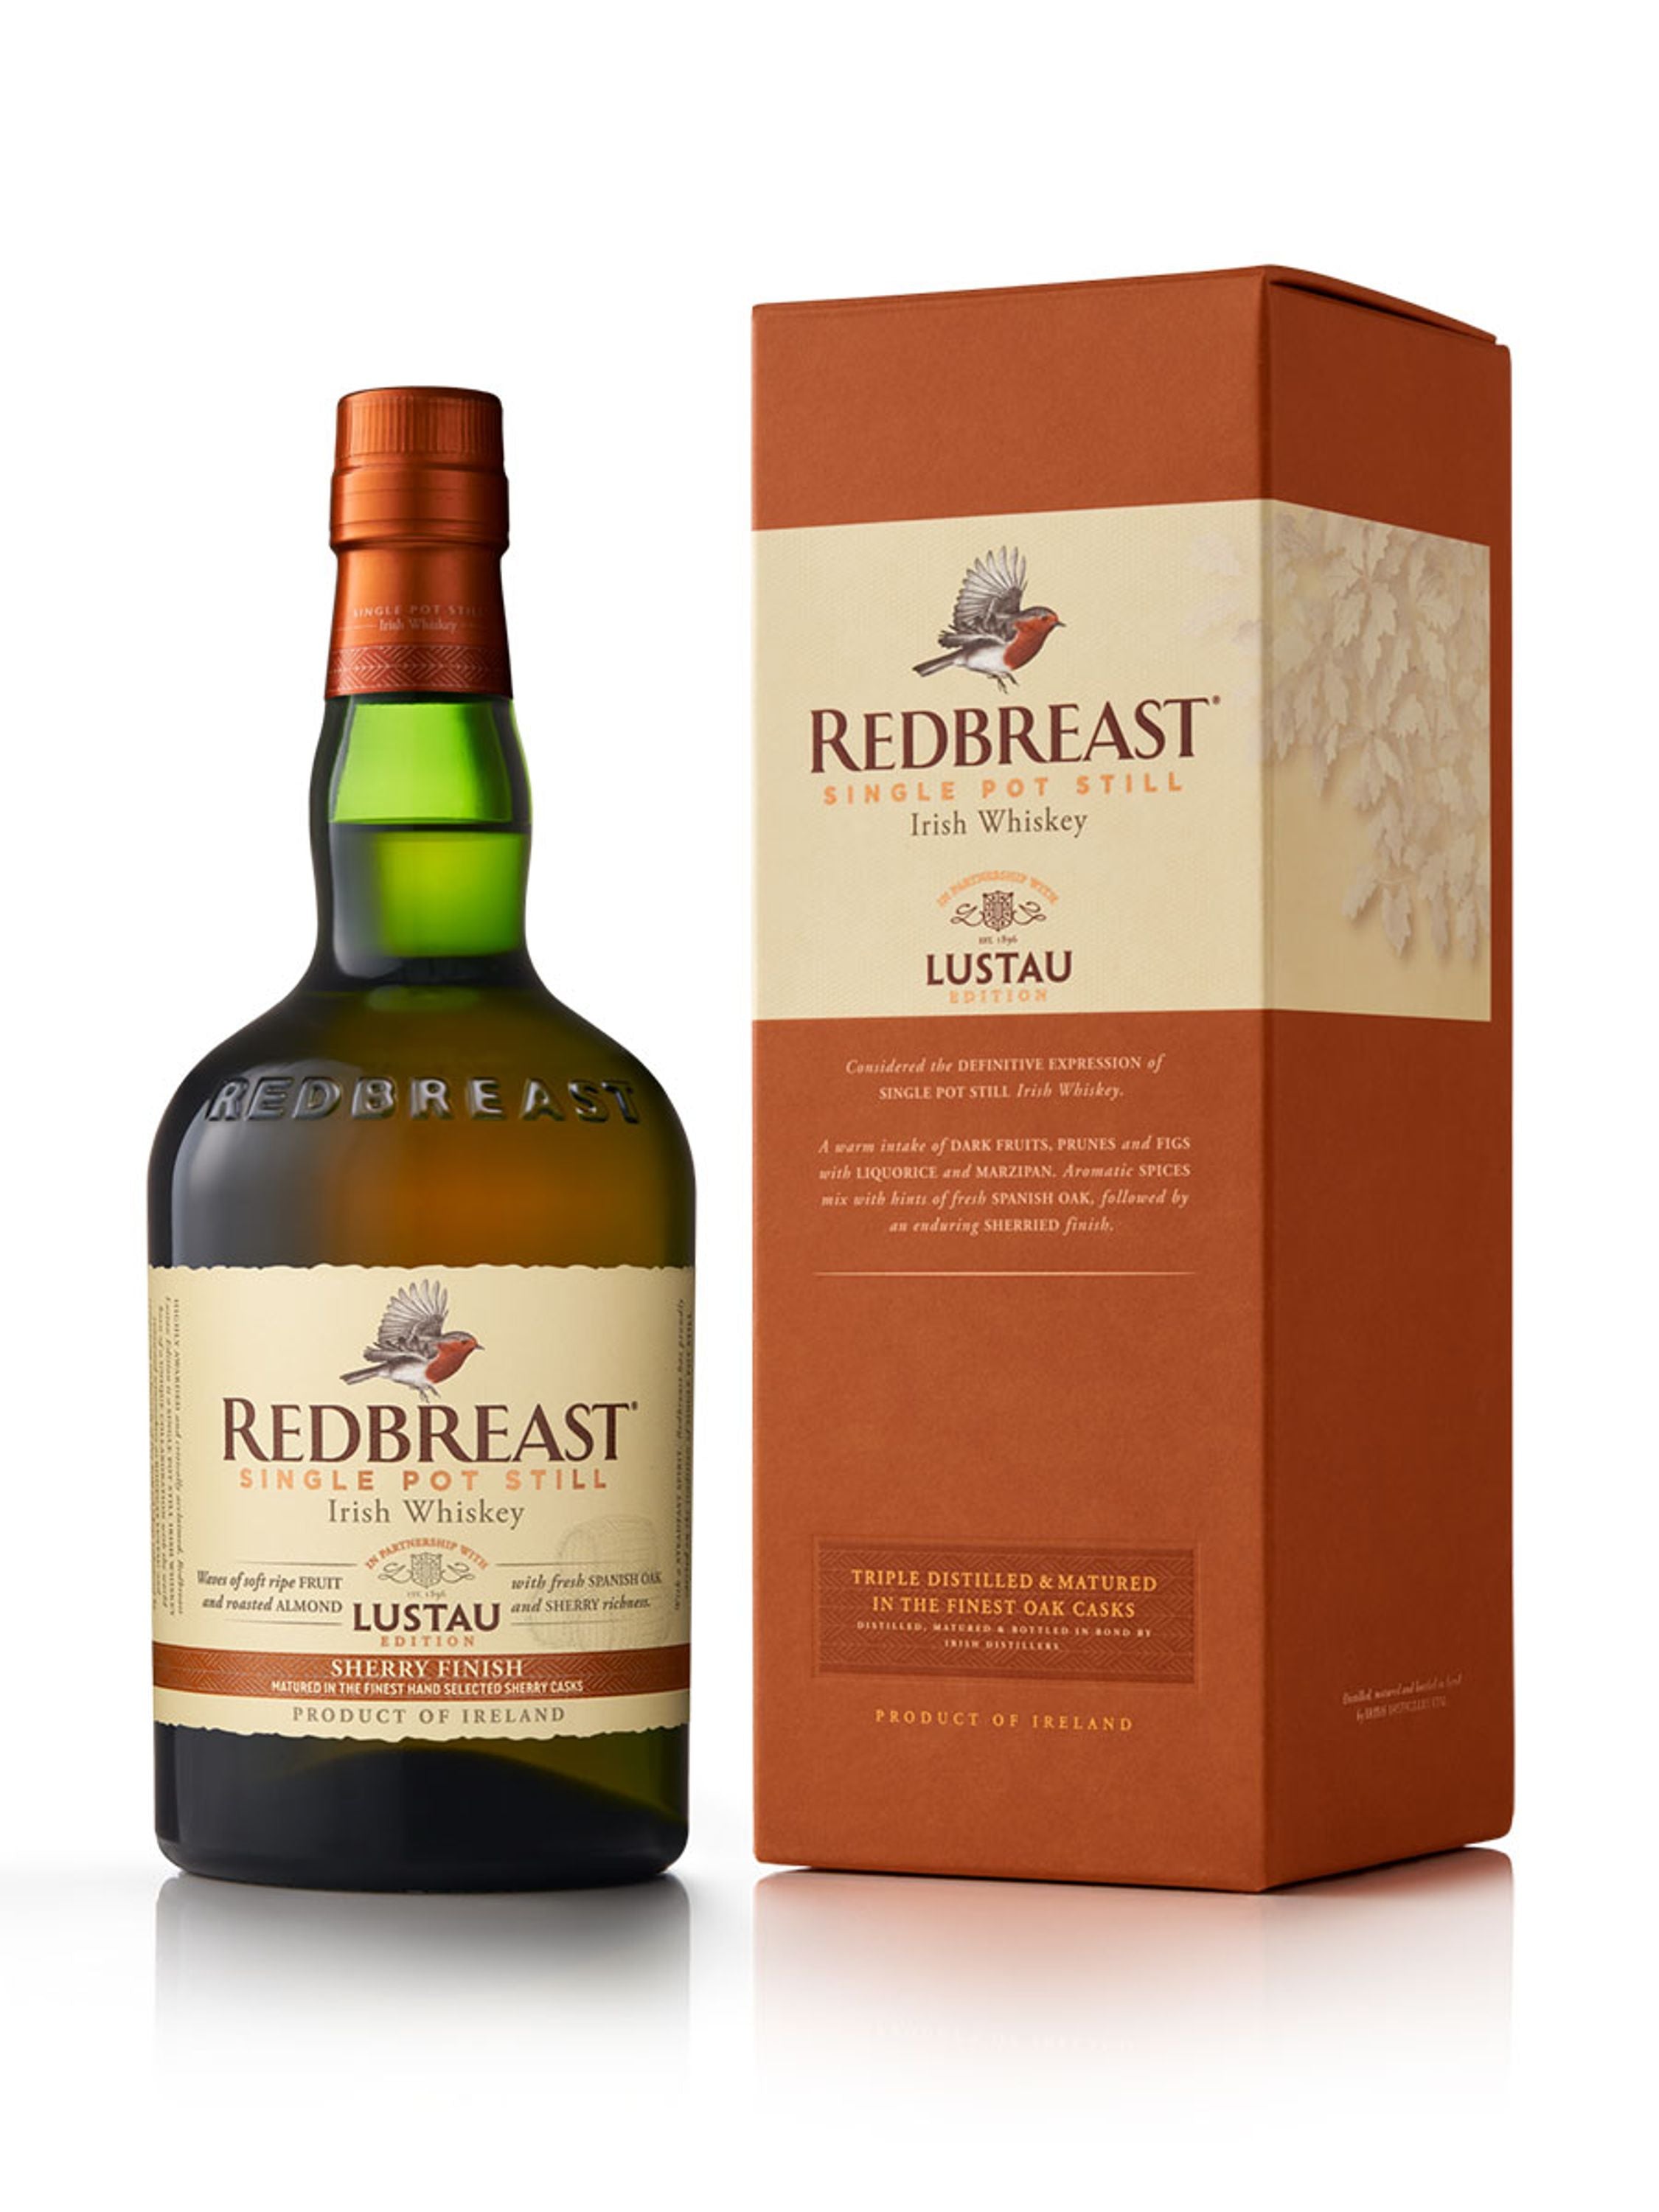 Redbreast Lustau Edition Single Pot Still Irish Whiskey, 0.7l, alc. 46% by volume